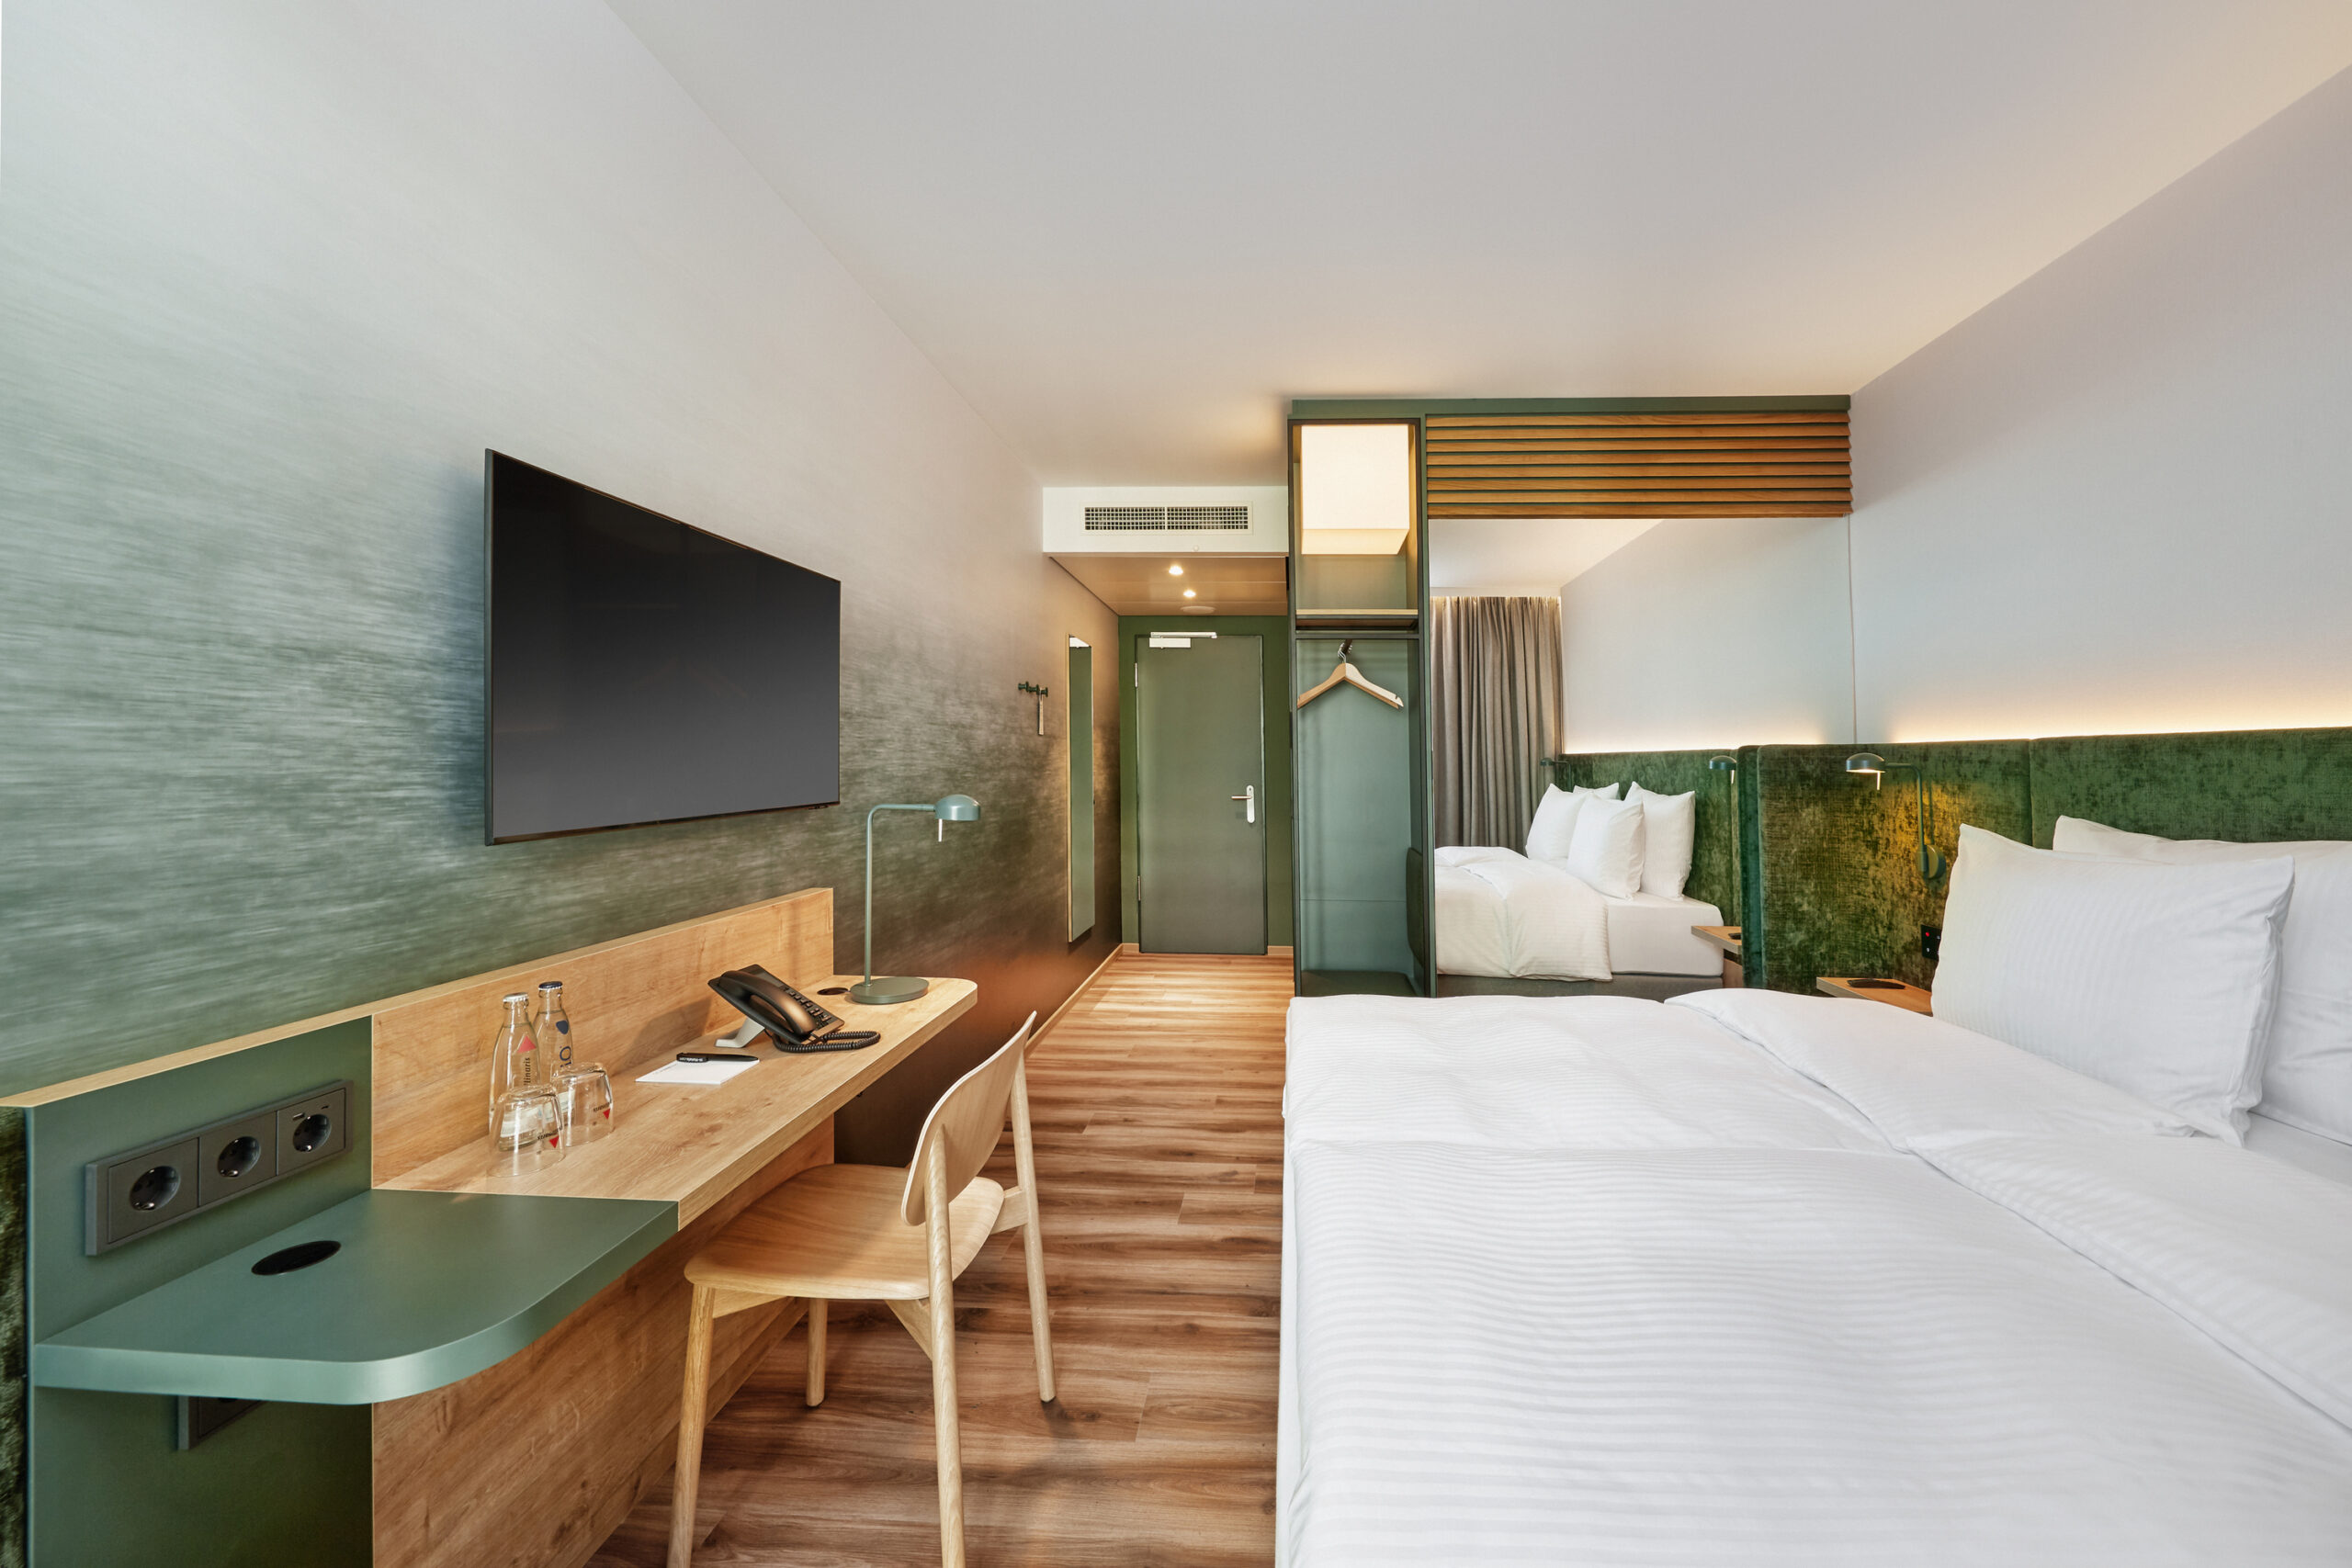 h-hotels_zimmer-komfort-doppelzimmer-02-hplus-hotel-frankfurt-eschborn_L-max.-3000px-_88410bc5_